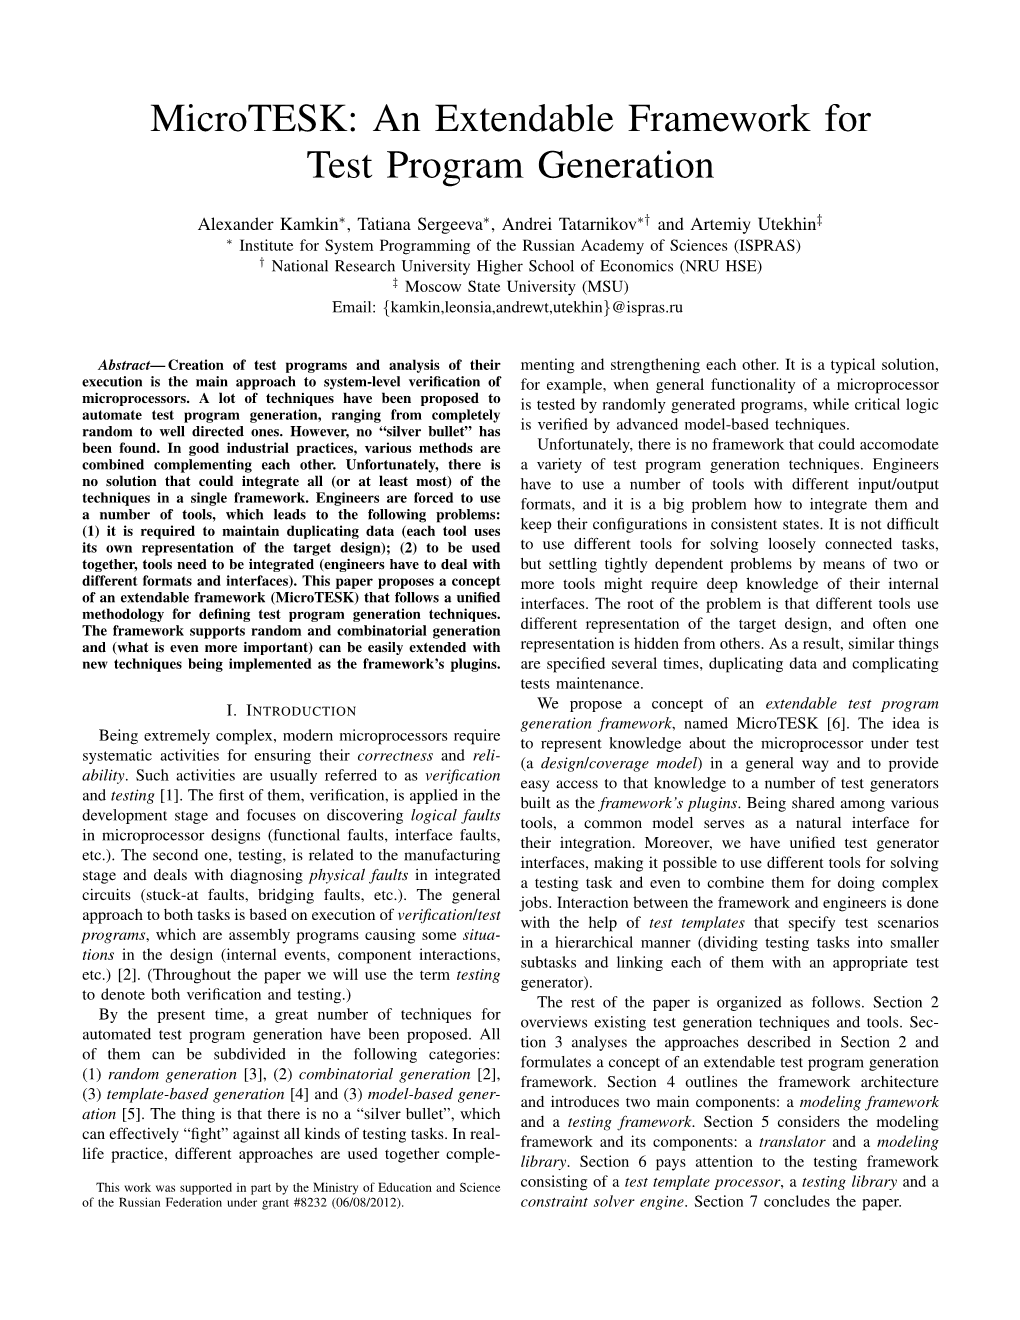 An Extendable Framework for Test Program Generation